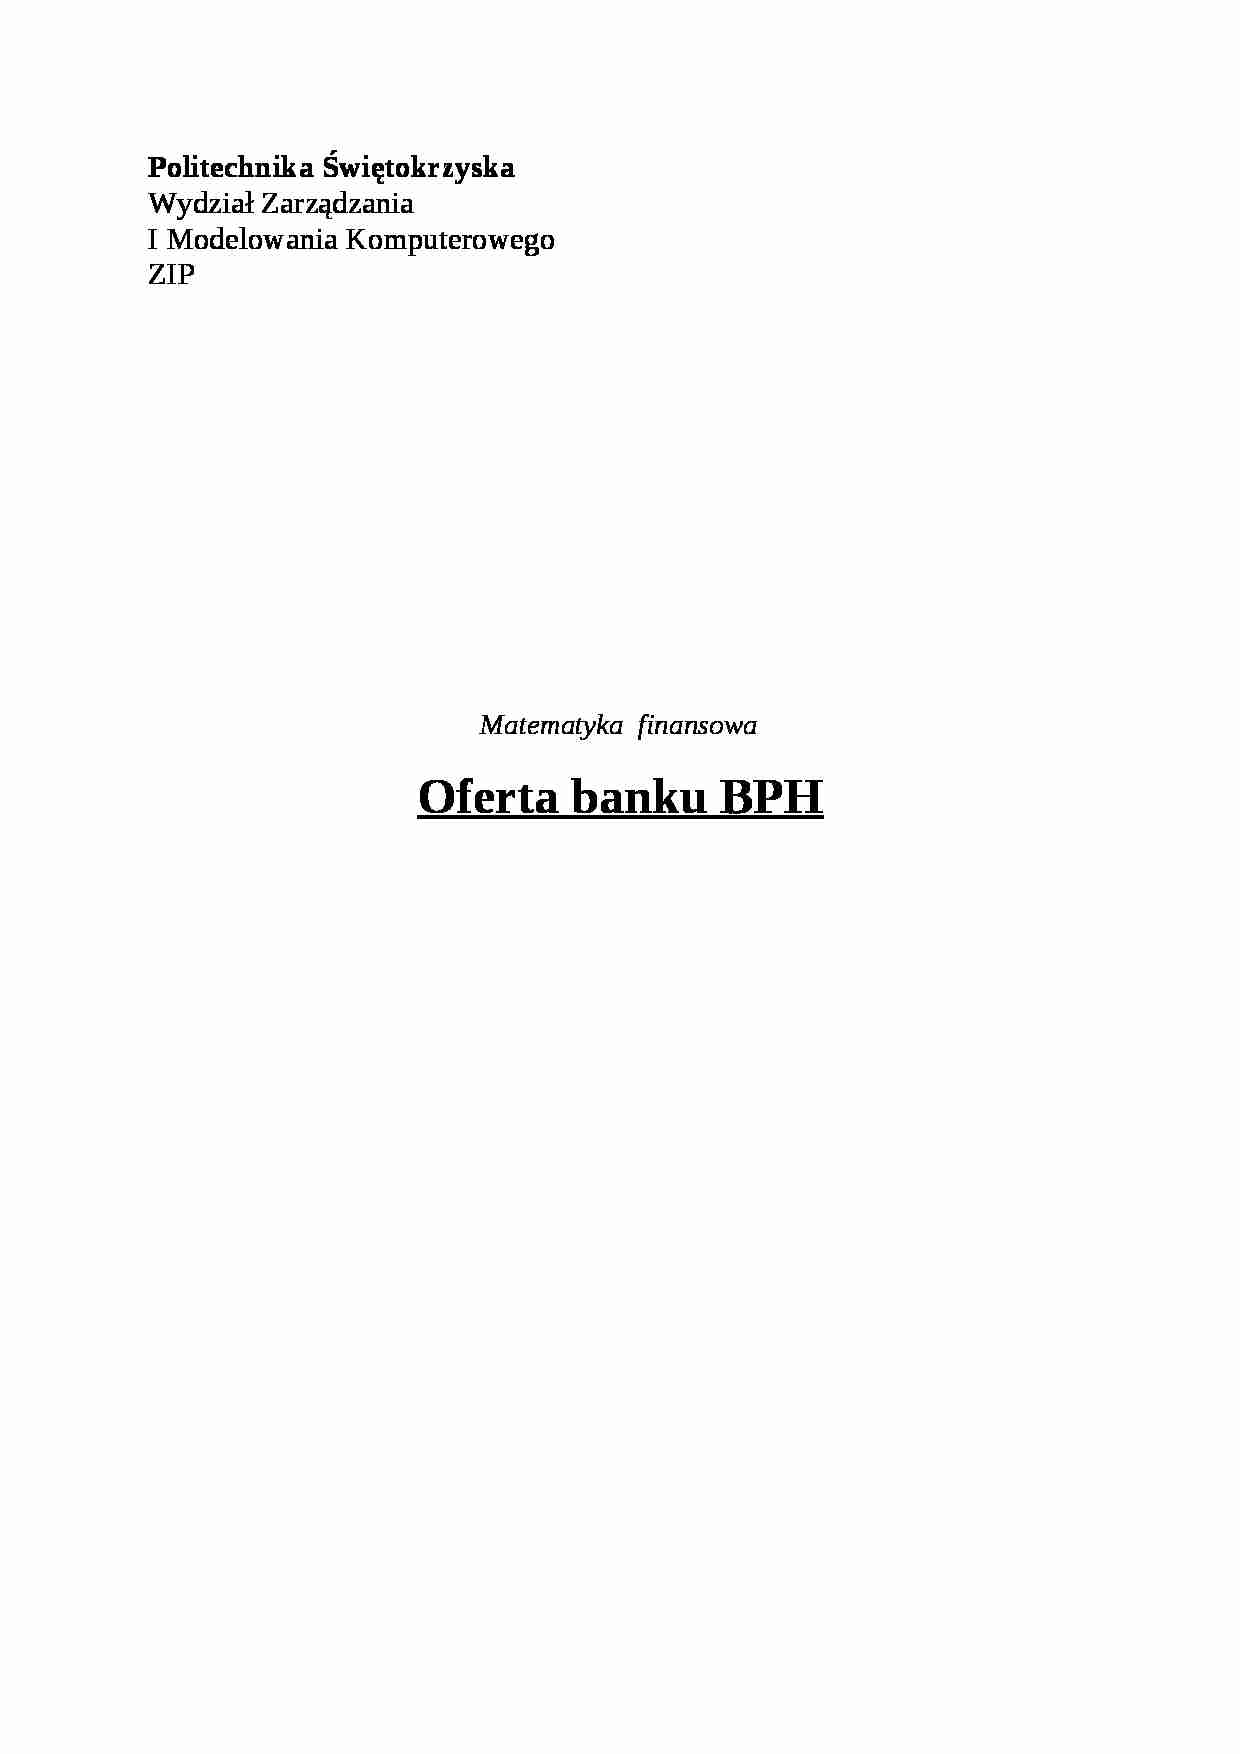 Oferta banku BPH - strona 1